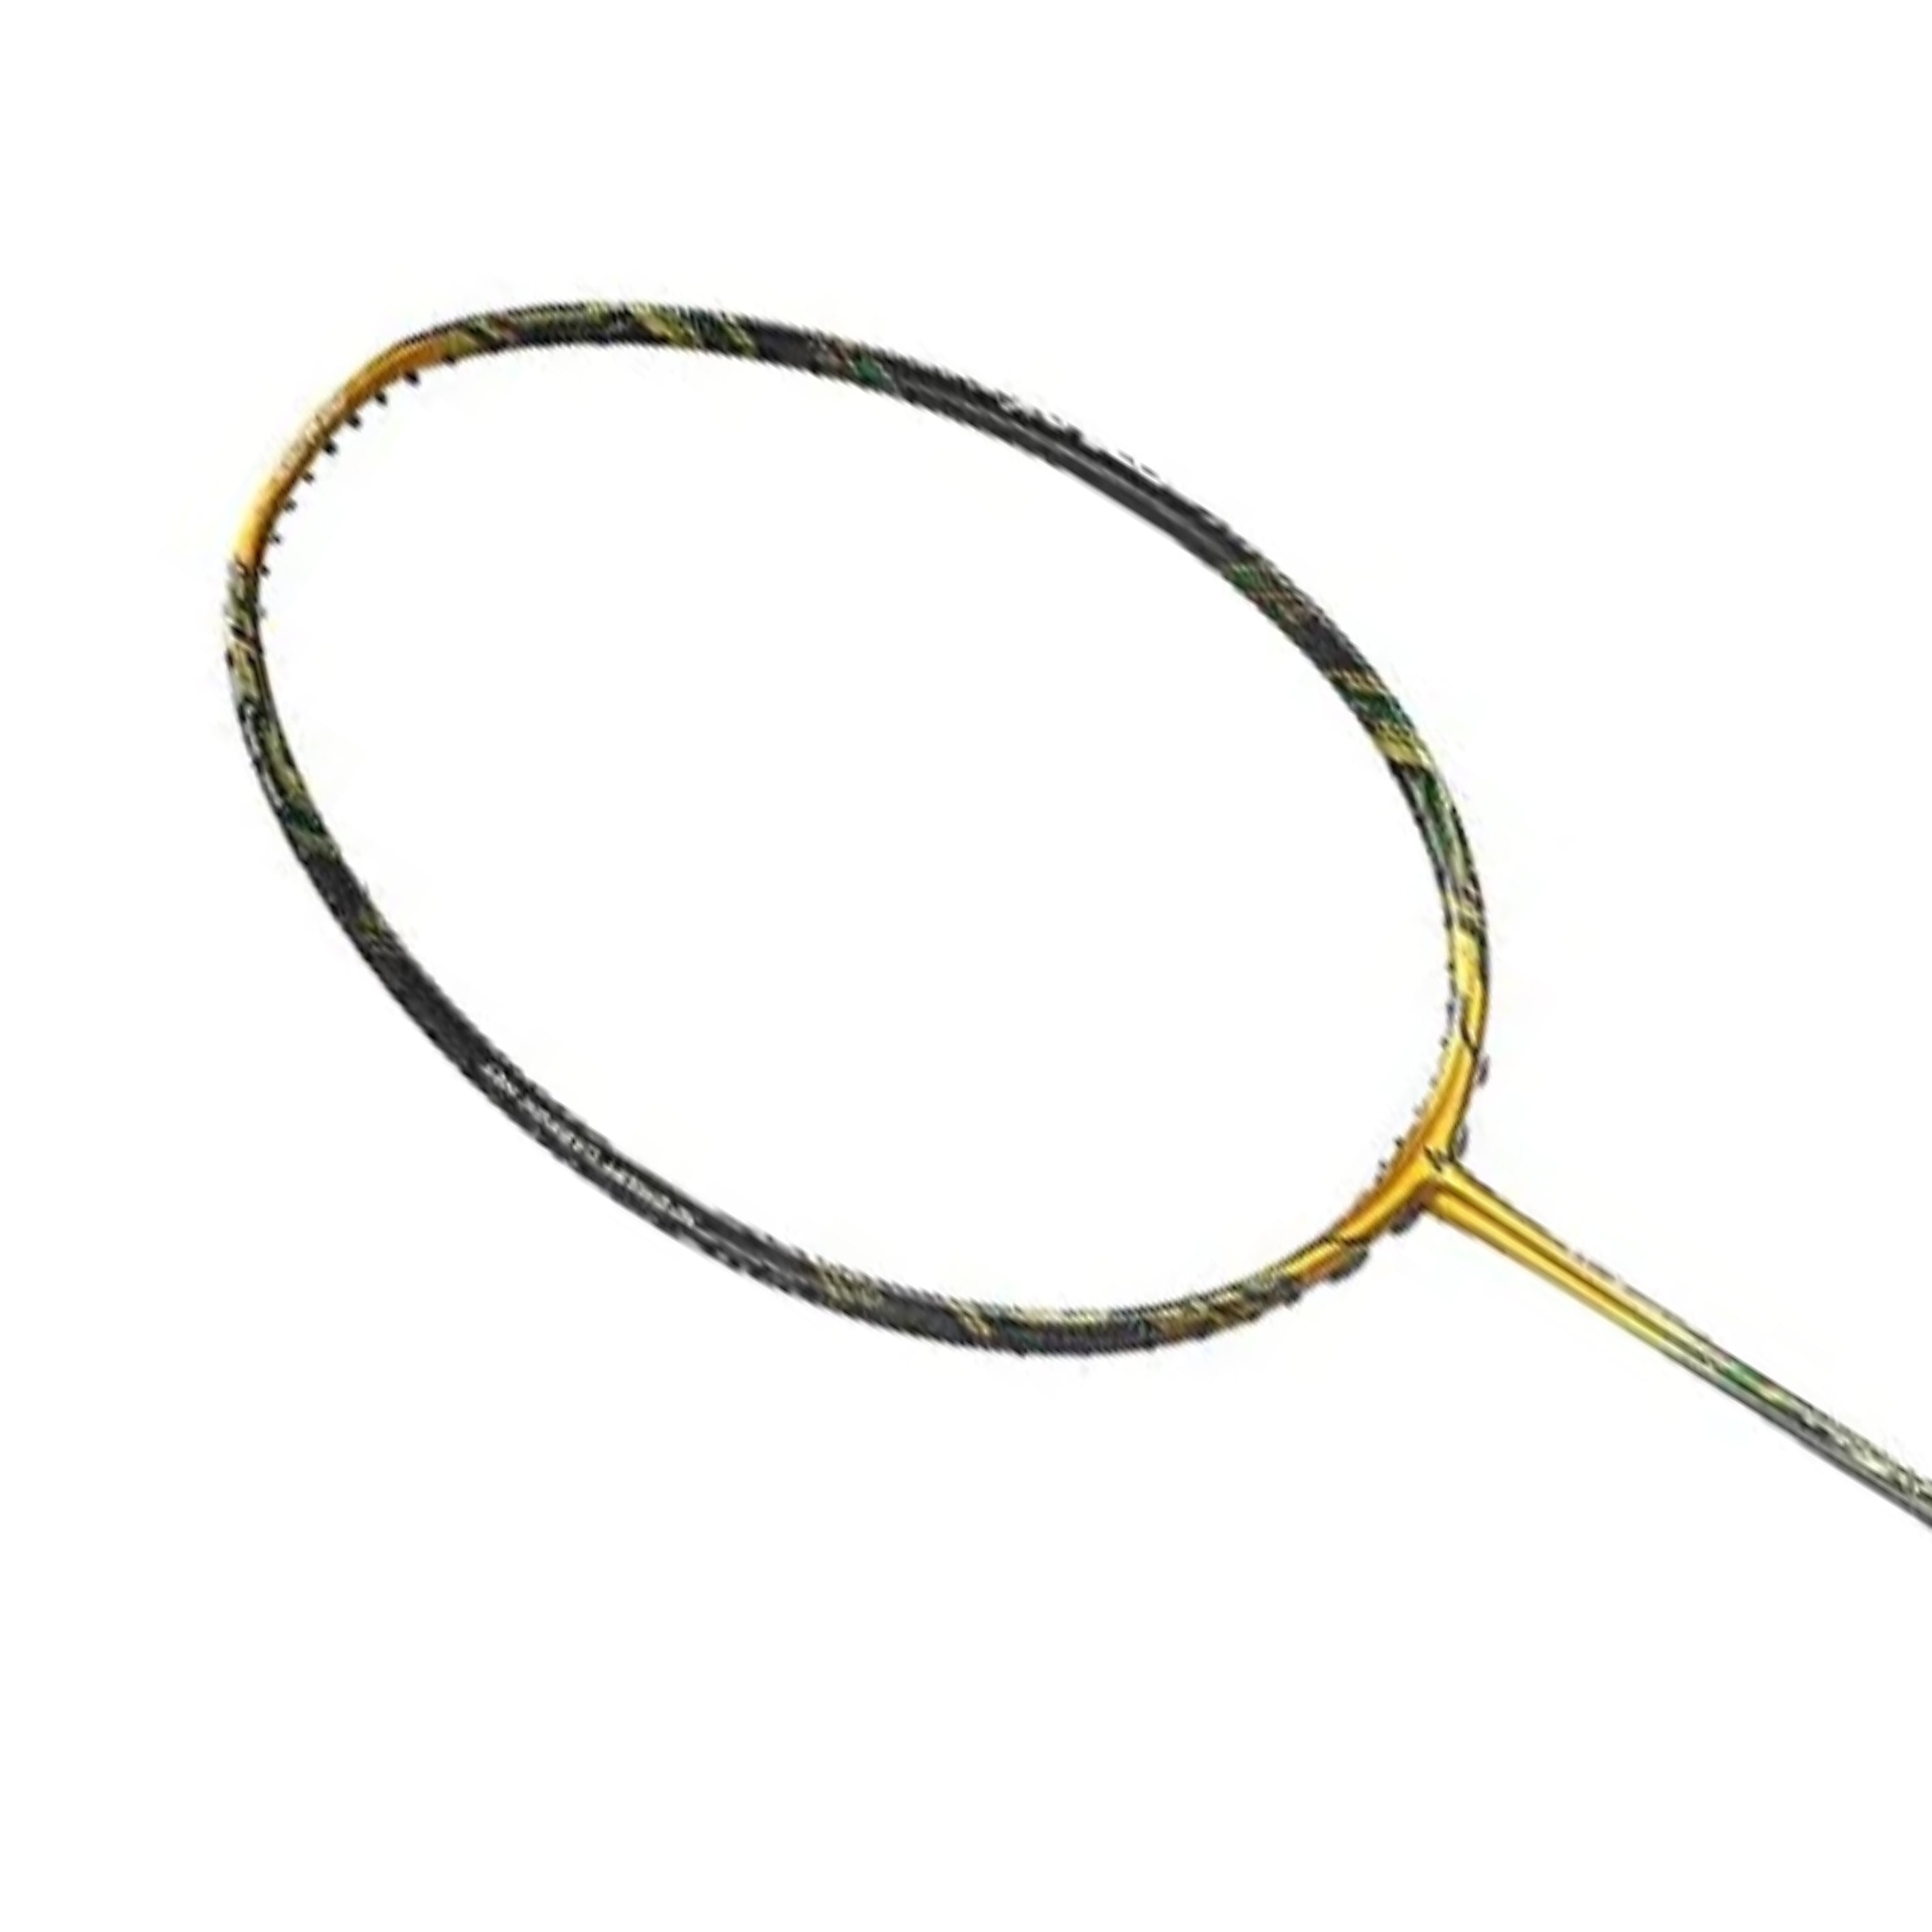 Master 800 II Unstrung Badminton Racket (Gold)